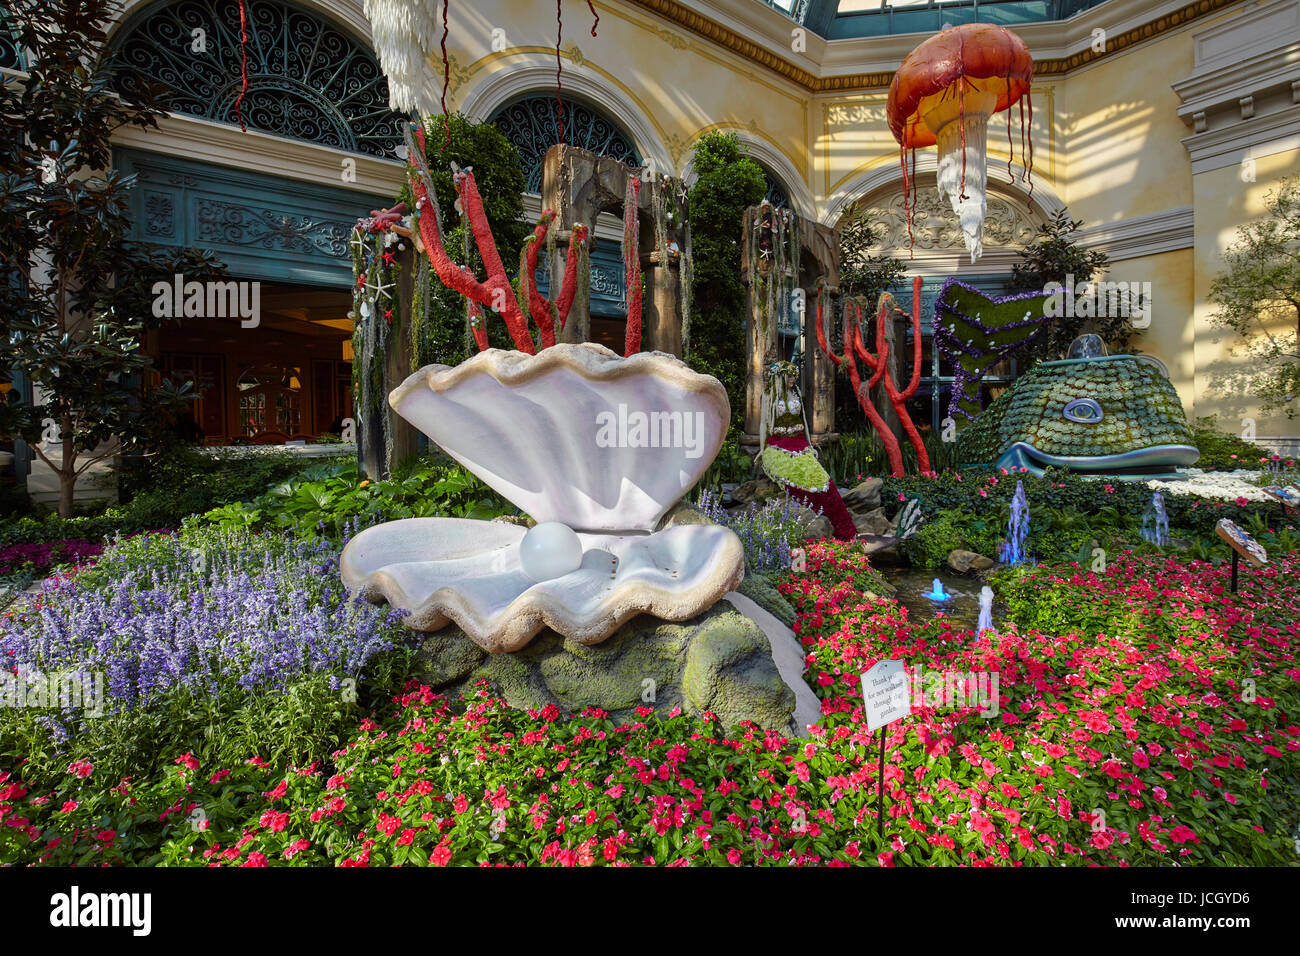 Botanical Gardens in the Bellagio hotel, Las Vegas, Nevada, United States Stock Photo